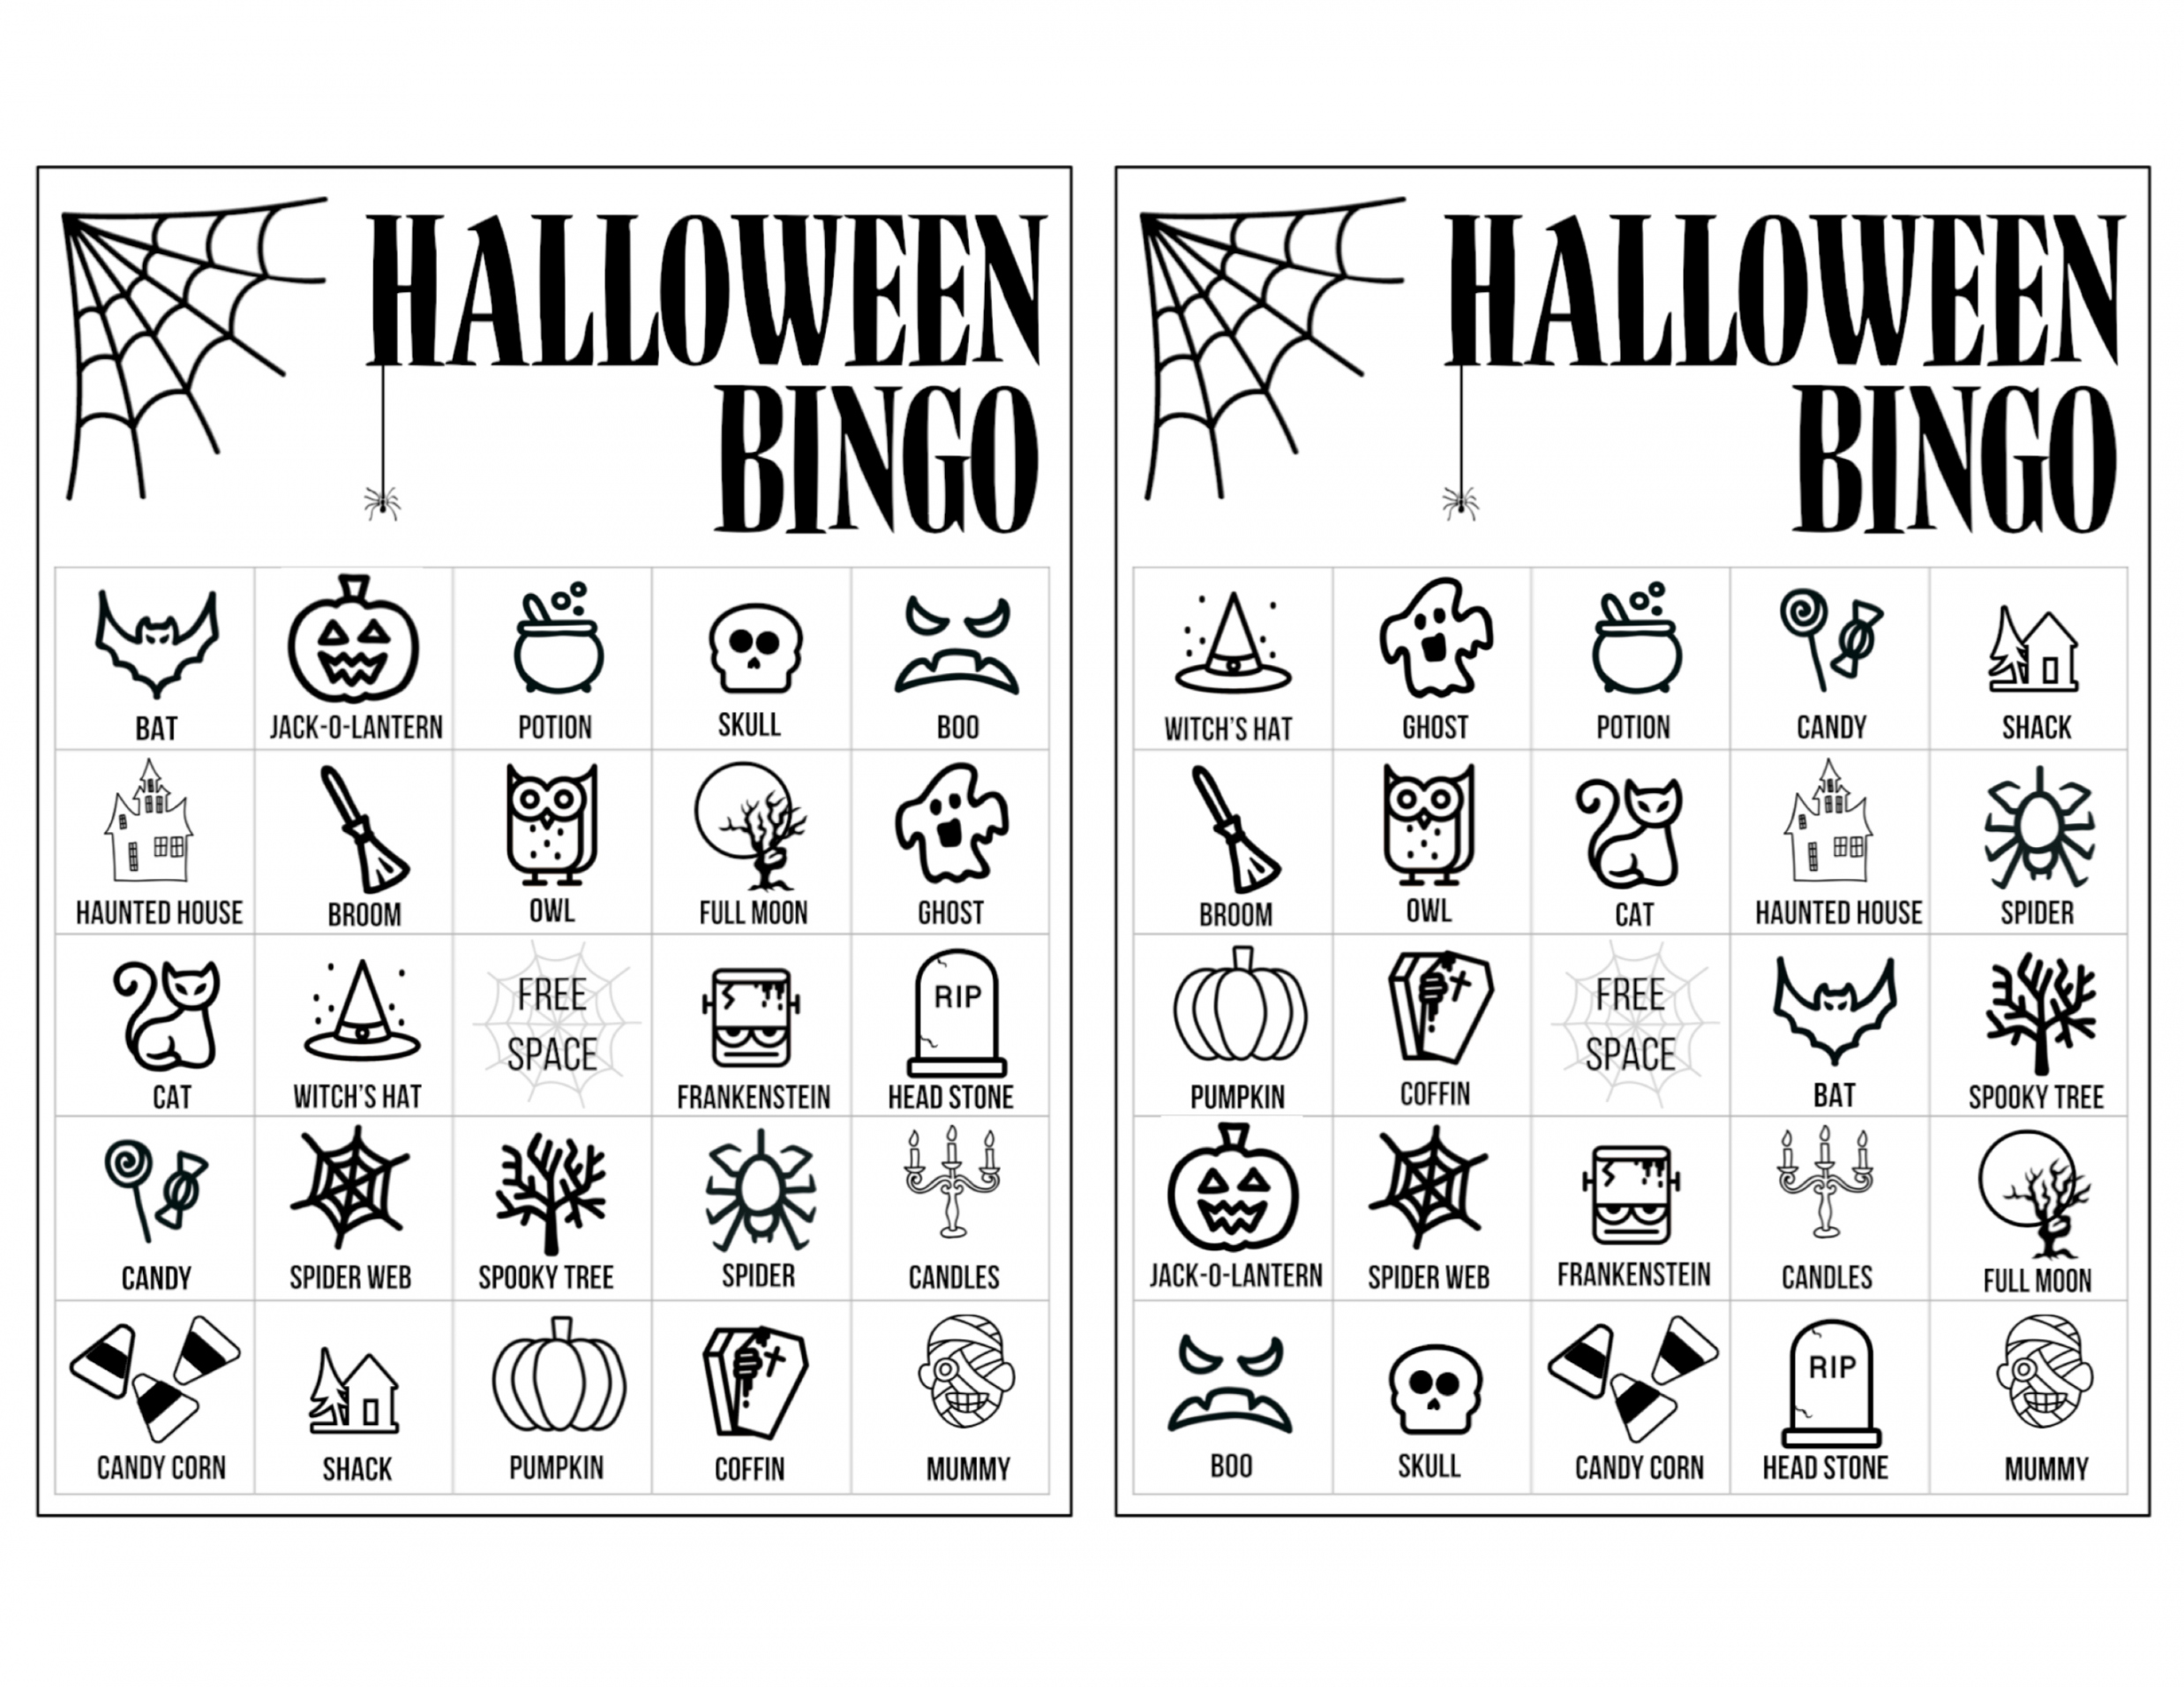 Free Printable Halloween Bingo - Printable - Halloween Bingo Printable Game Cards Template - Paper Trail Design